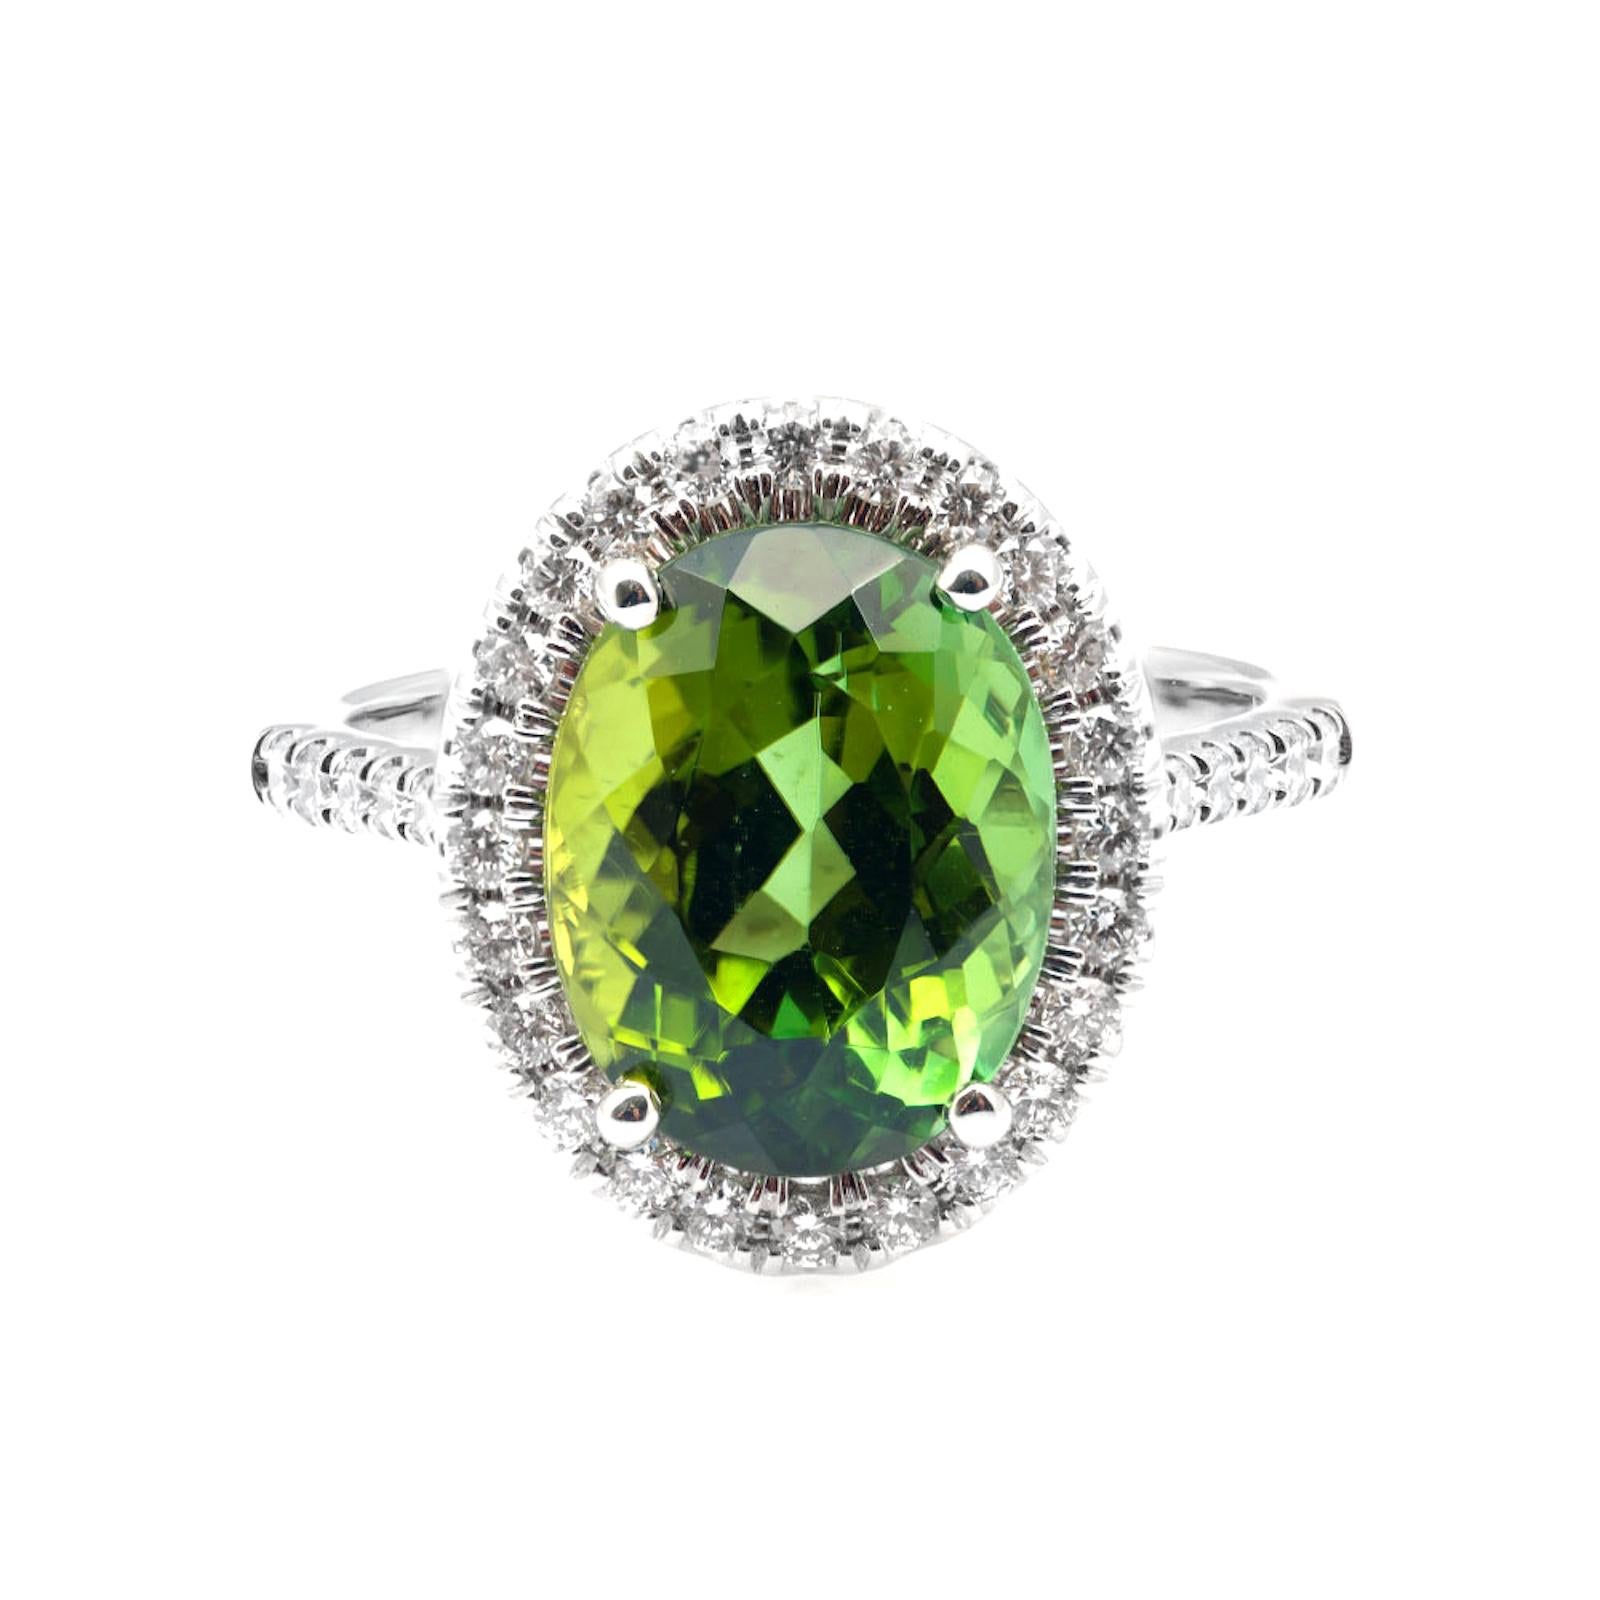 Mixed Cut  4.53 Carat Green Tourmaline Diamonds  set in 14K White Gold Ring  For Sale